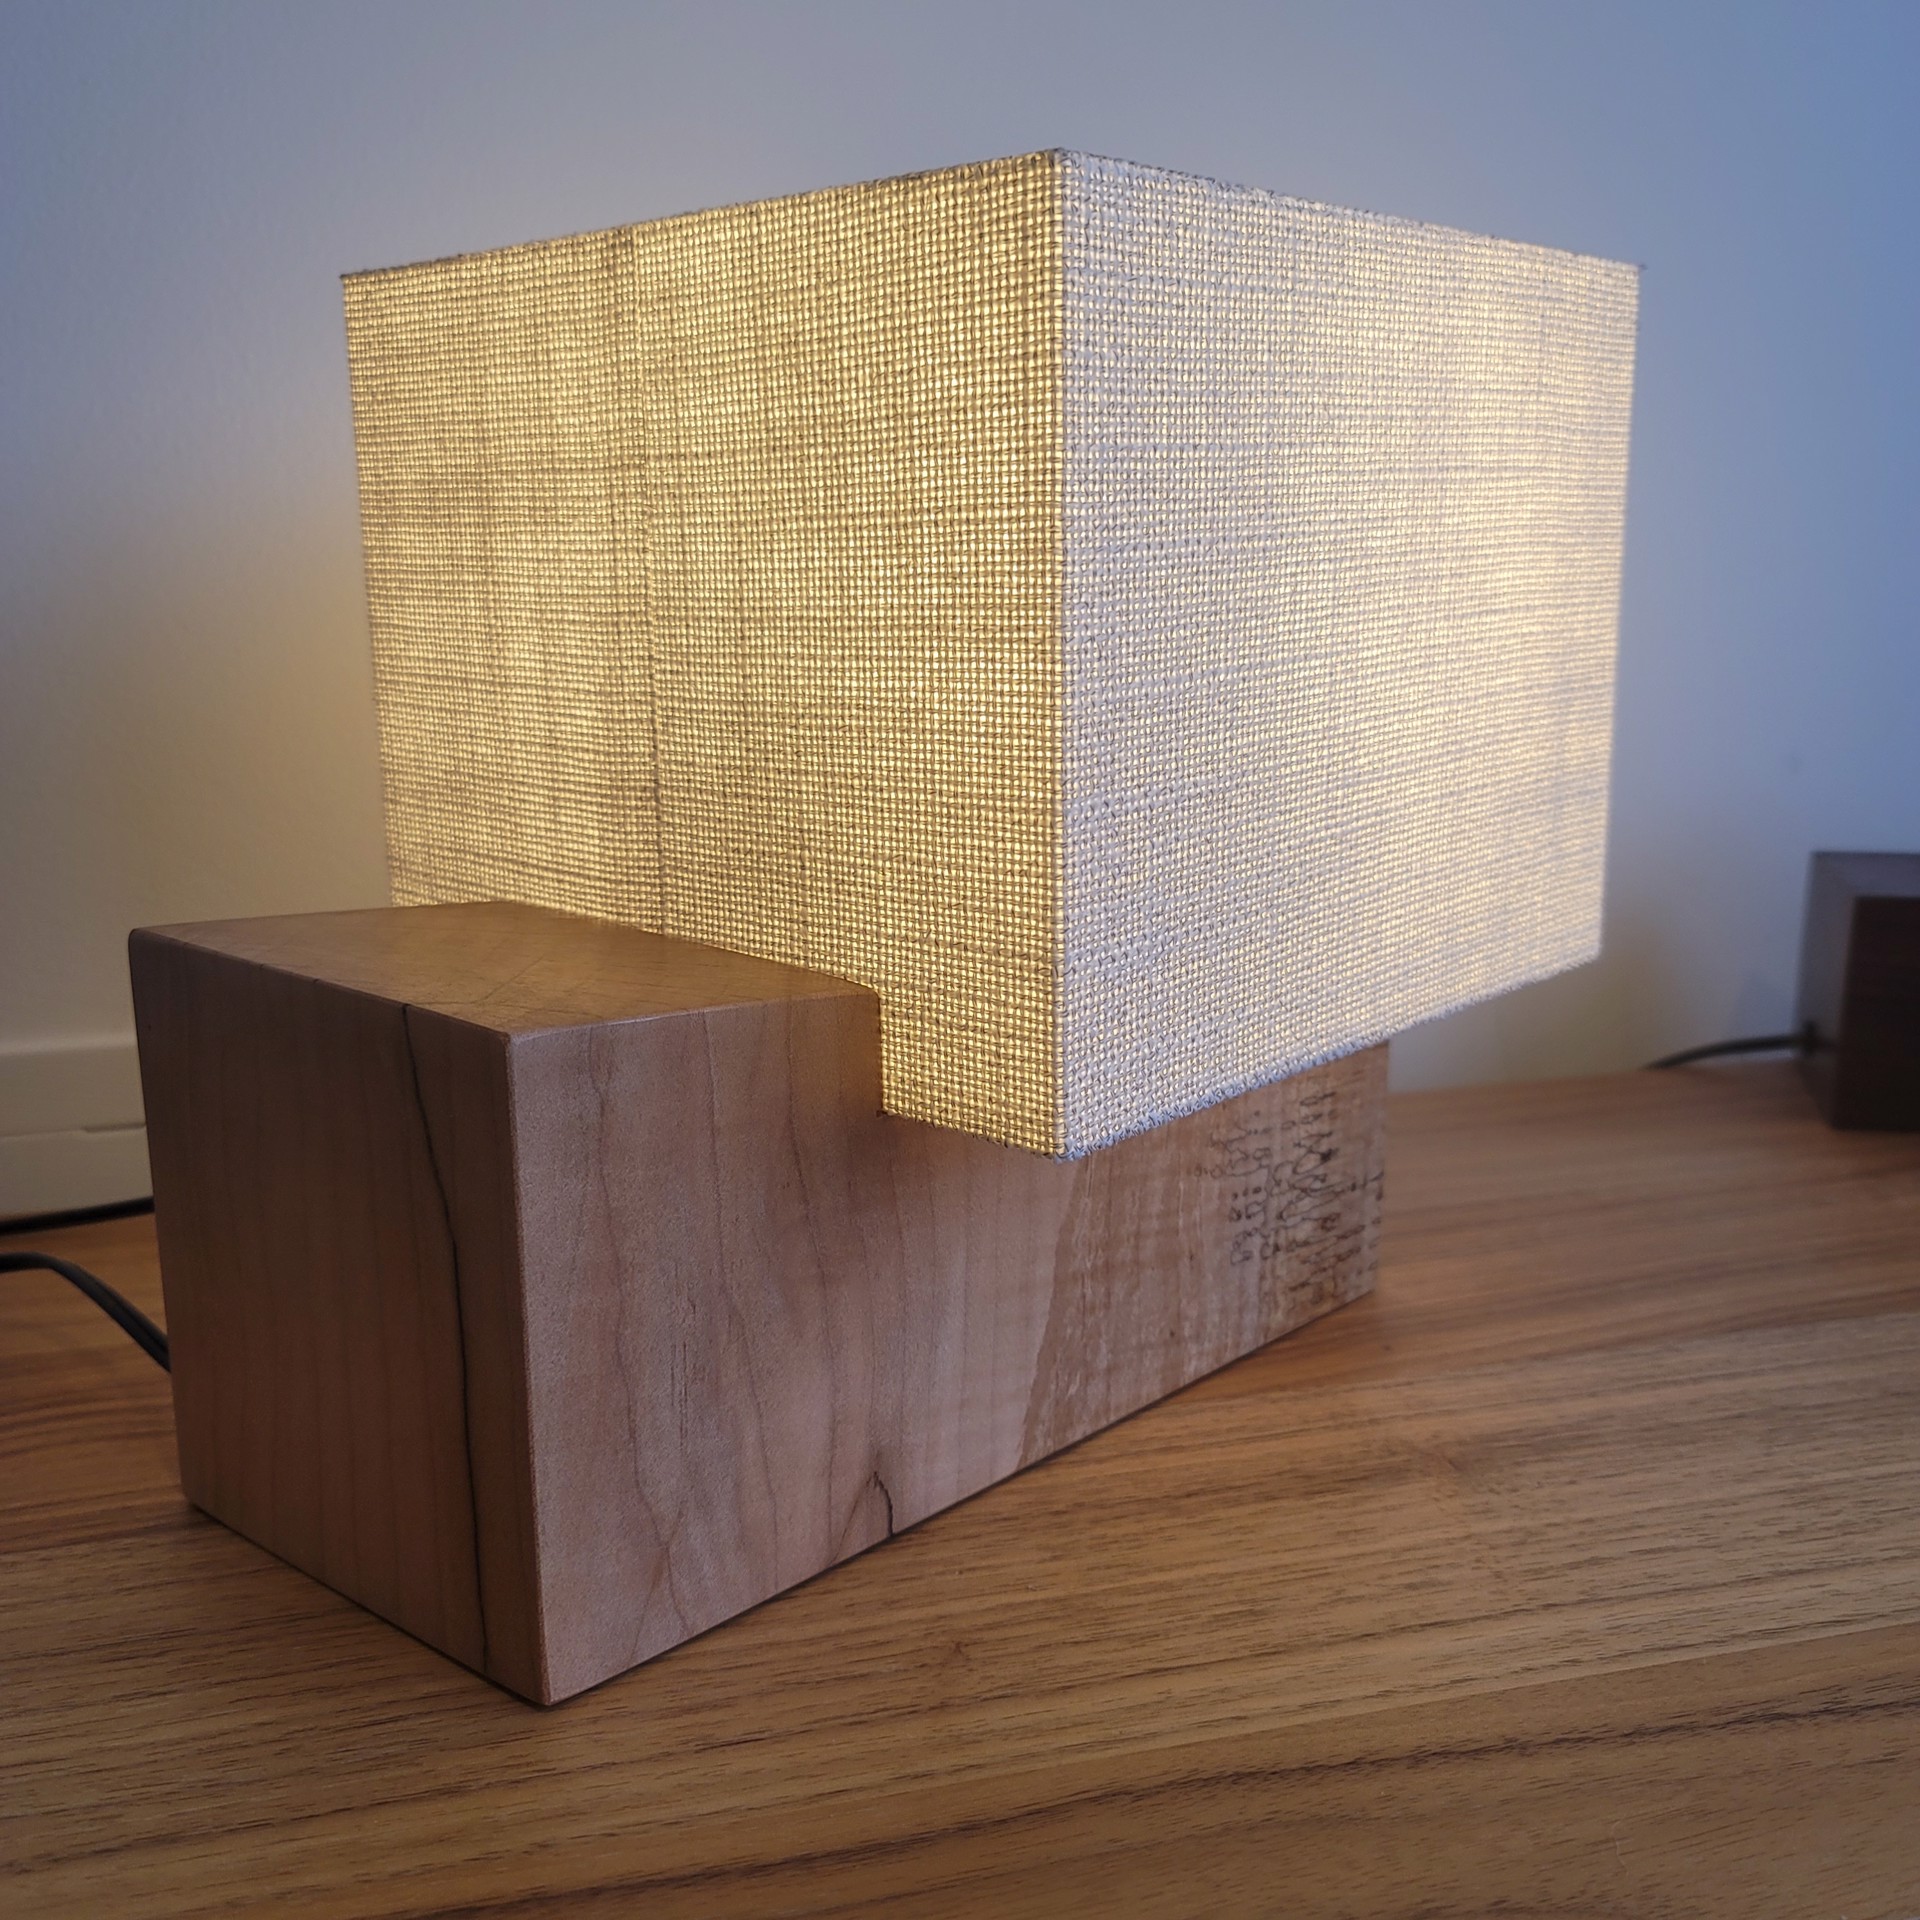 Maple Block Lamp by James Violette